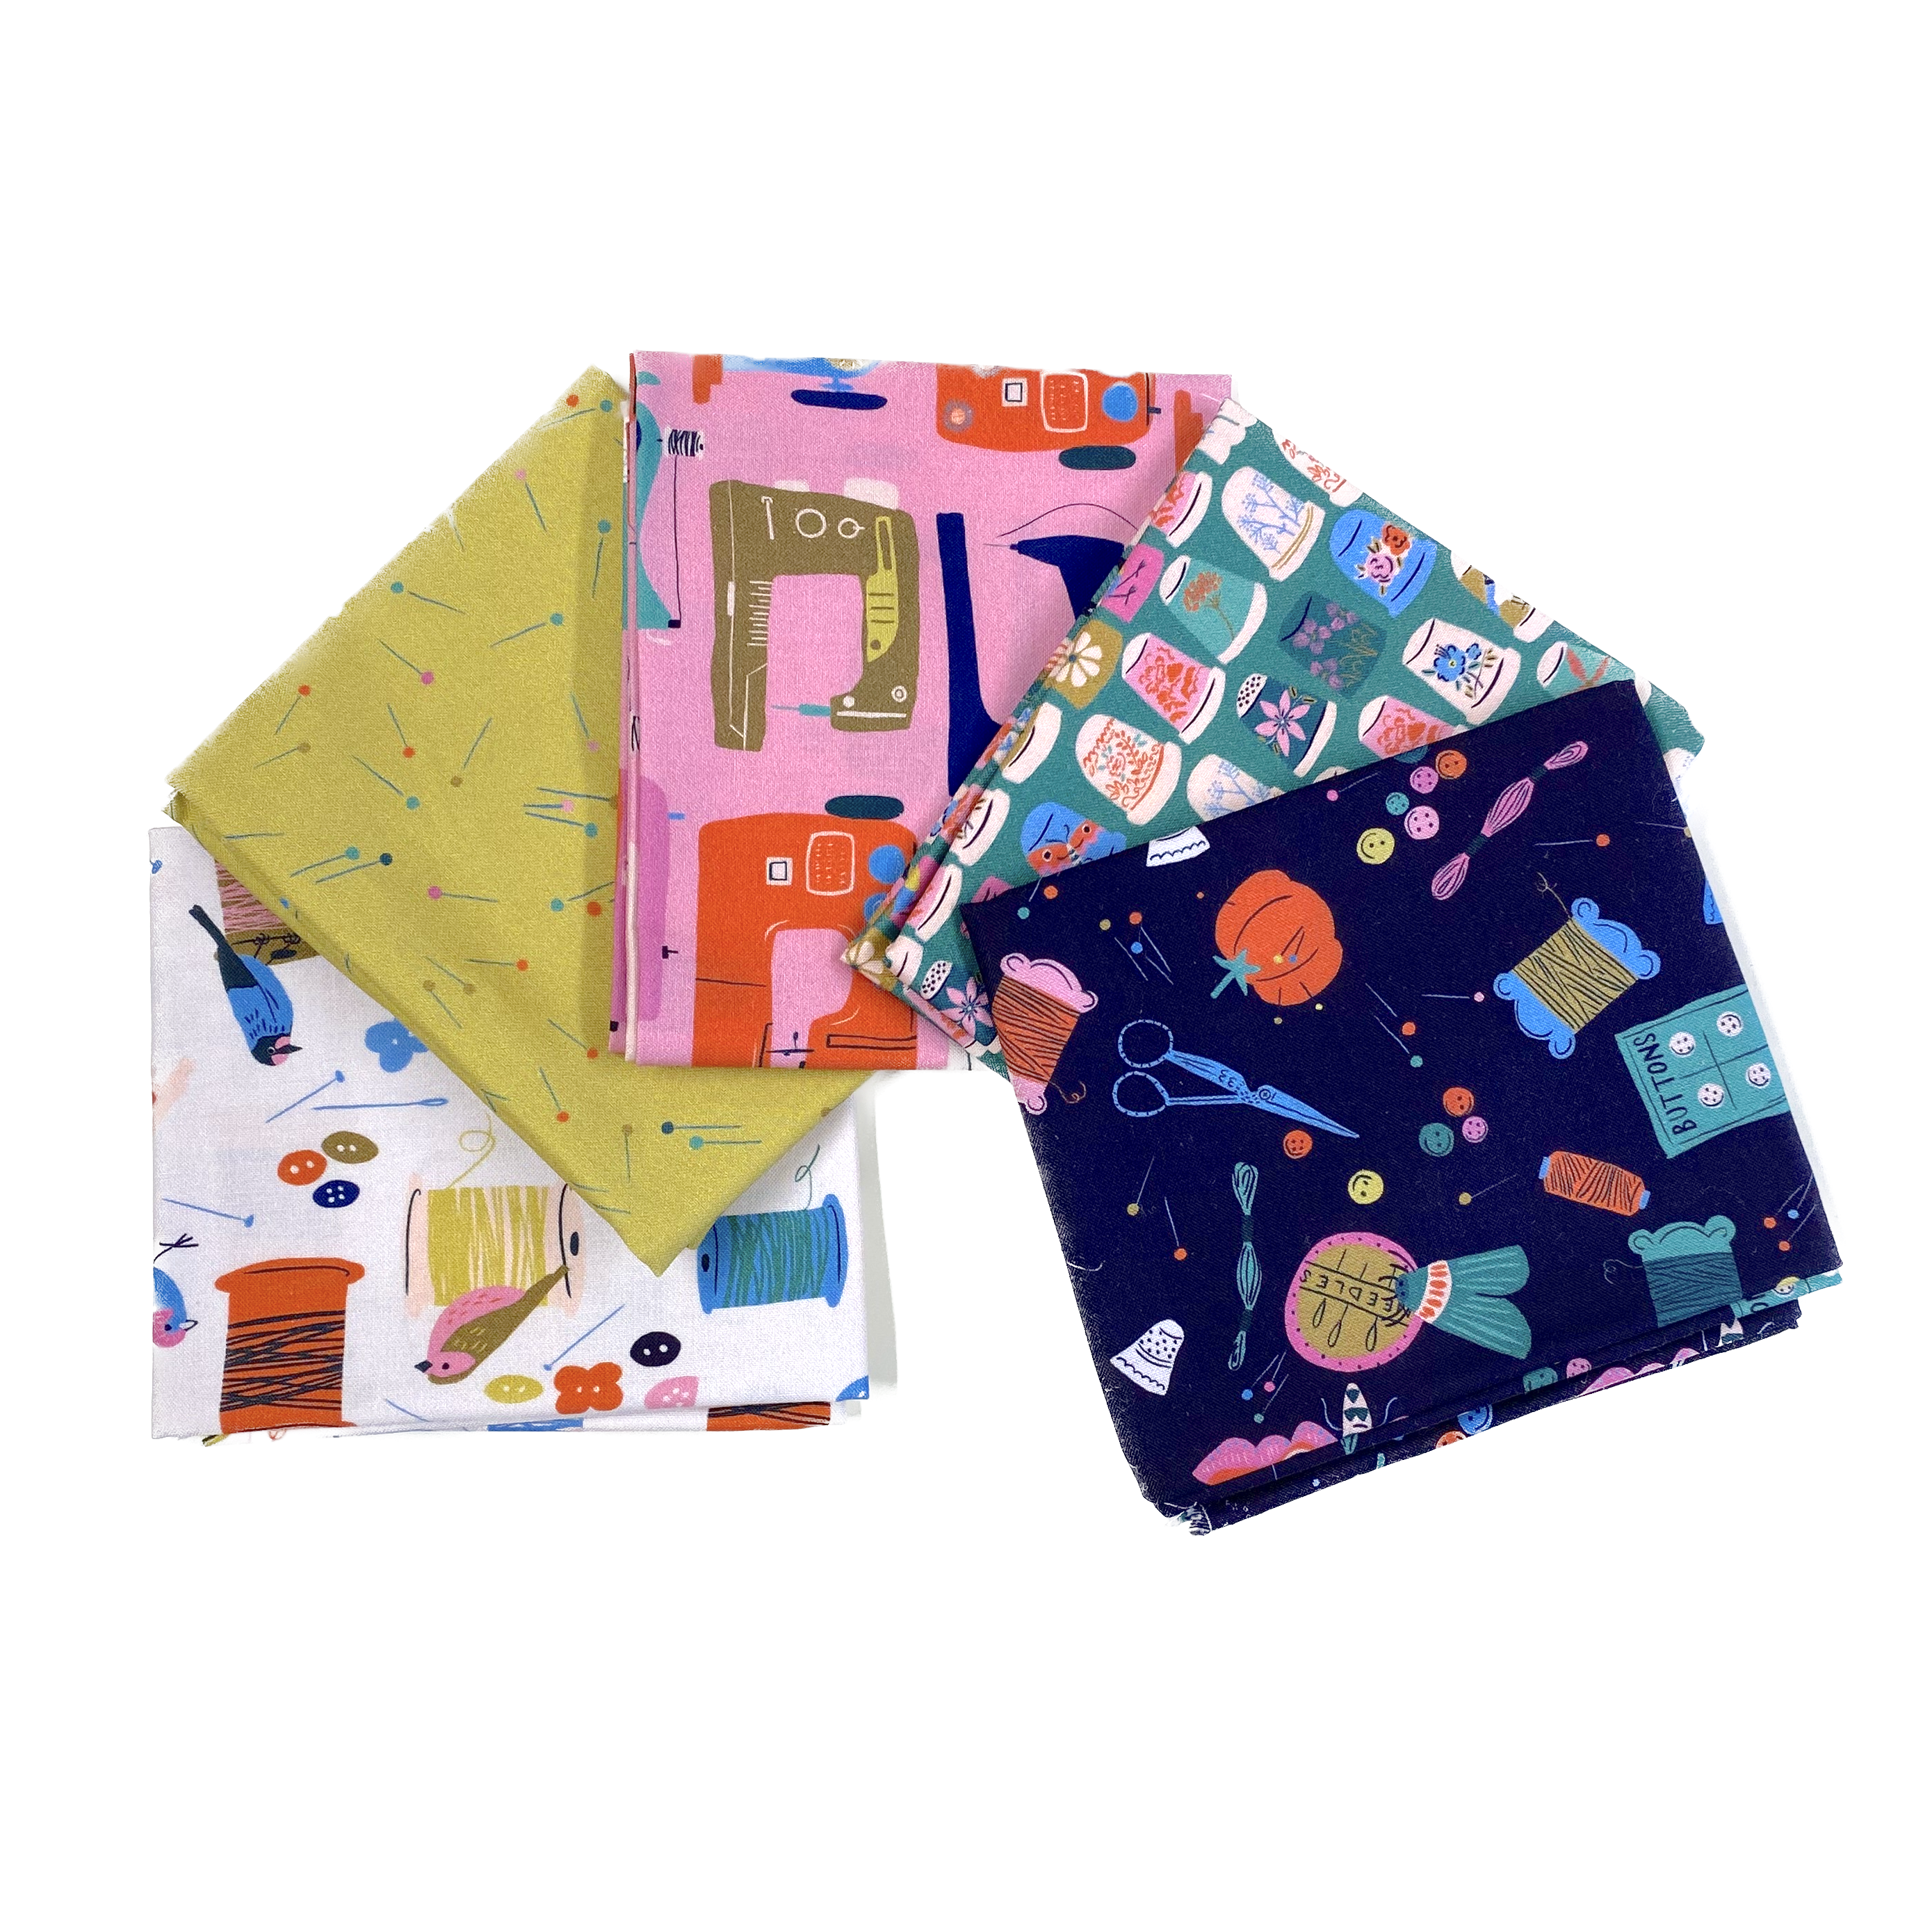 Quilting Fabric - Fat Quarter Bundle - Stitch & Sew by Louise Cunningham for Dashwood Studios